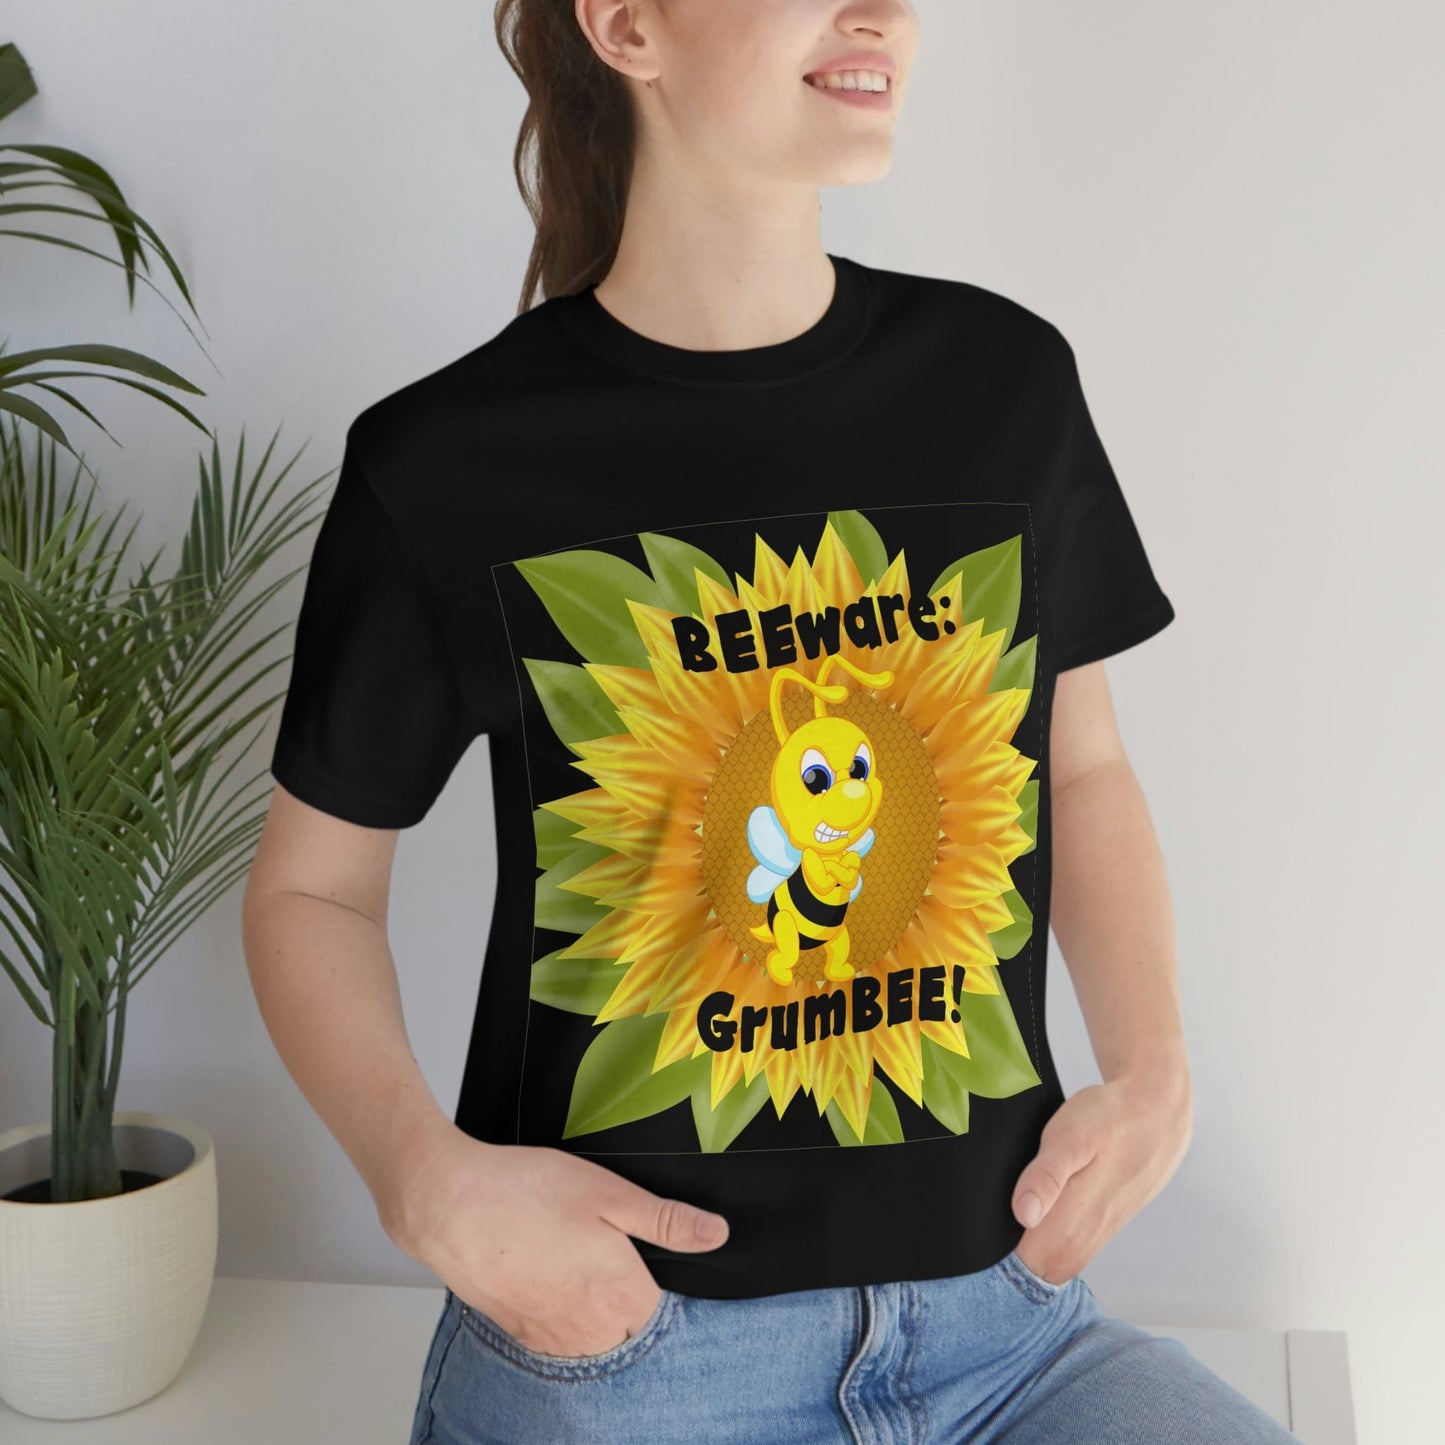 Bee Shirt, Witty Goofy Bee T Shirt, BEEware GrumBEE Sarcastic Silly Shirt, Kawaii, Cool Soft Bella Canvas Graphic Tee